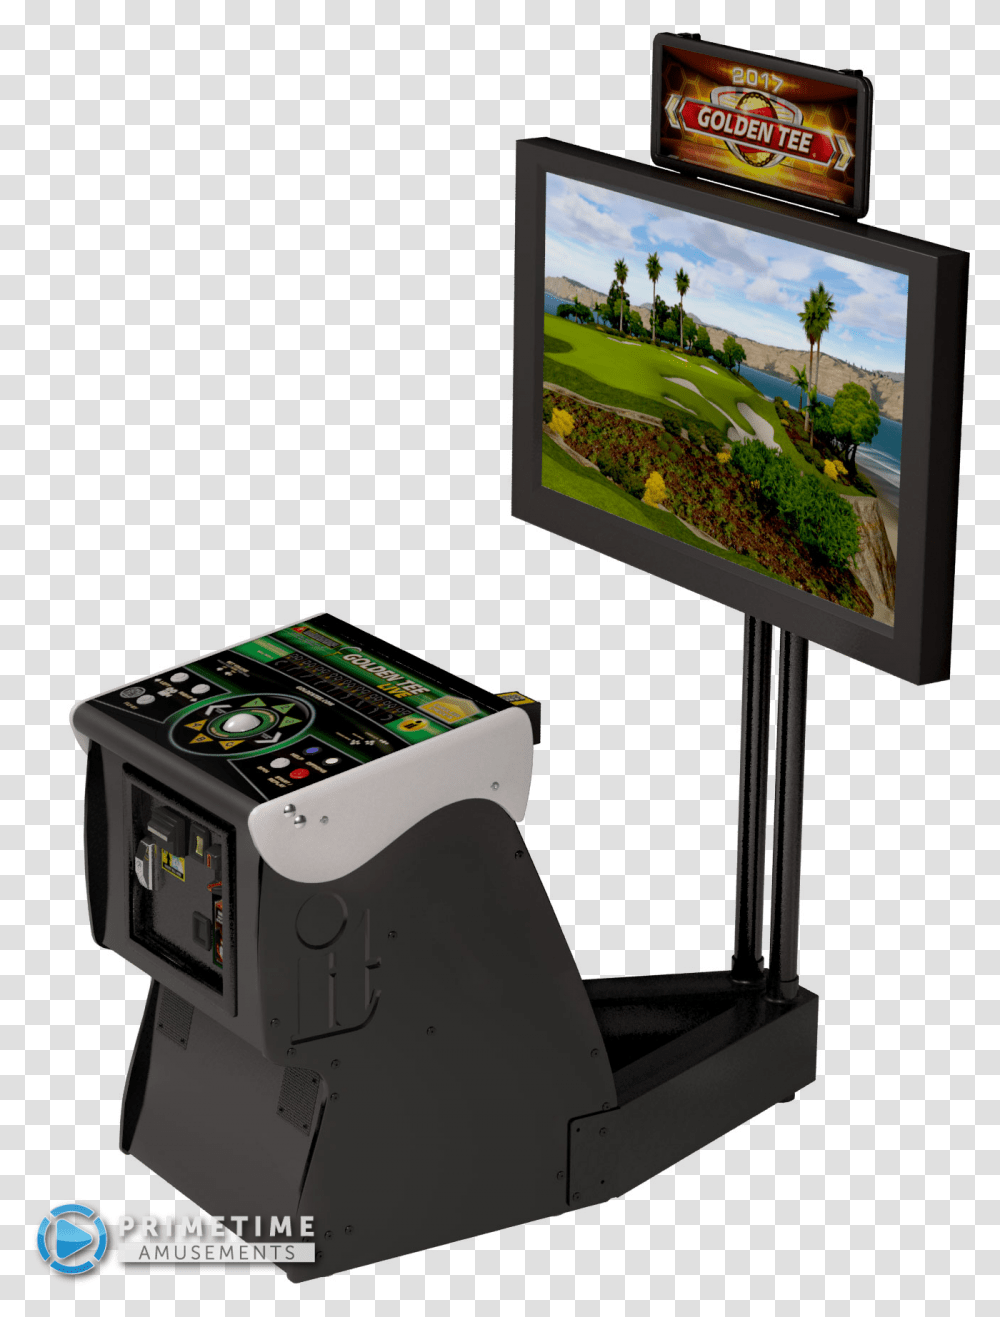 Golden Tee 2017 Live Arcade Game Flat Panel Display, Arcade Game Machine, Box, Monitor, Screen Transparent Png